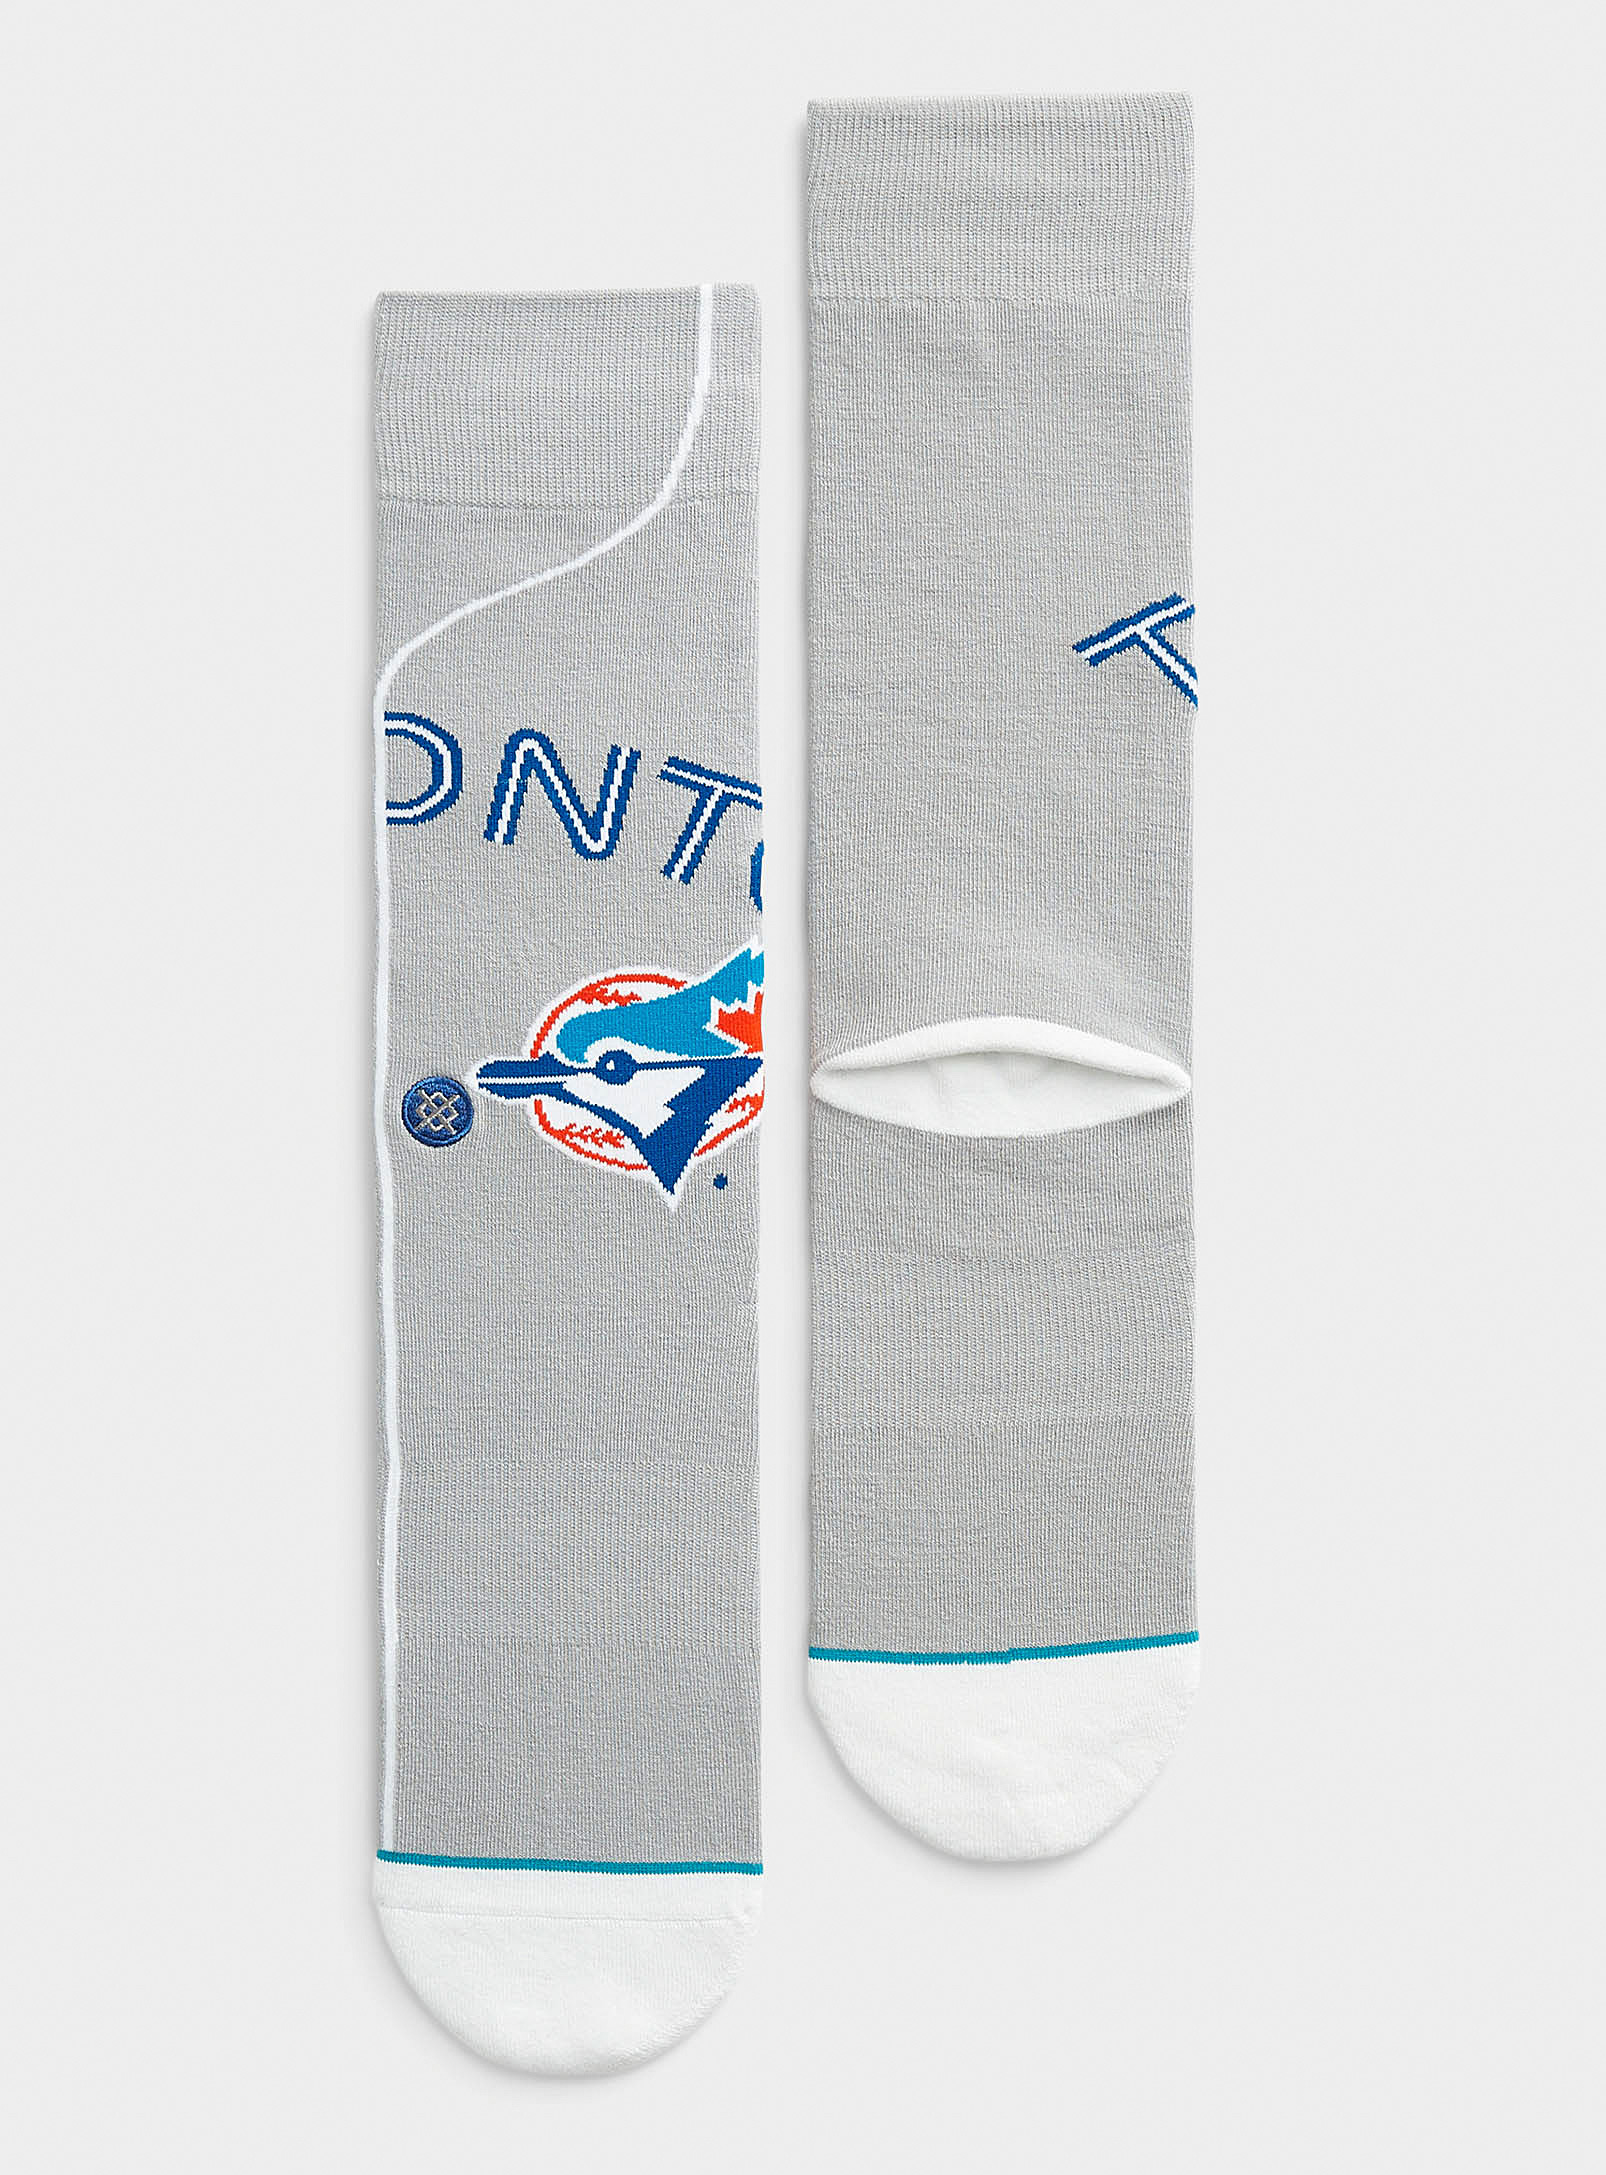 Stance Blue Jays Socks In Gray